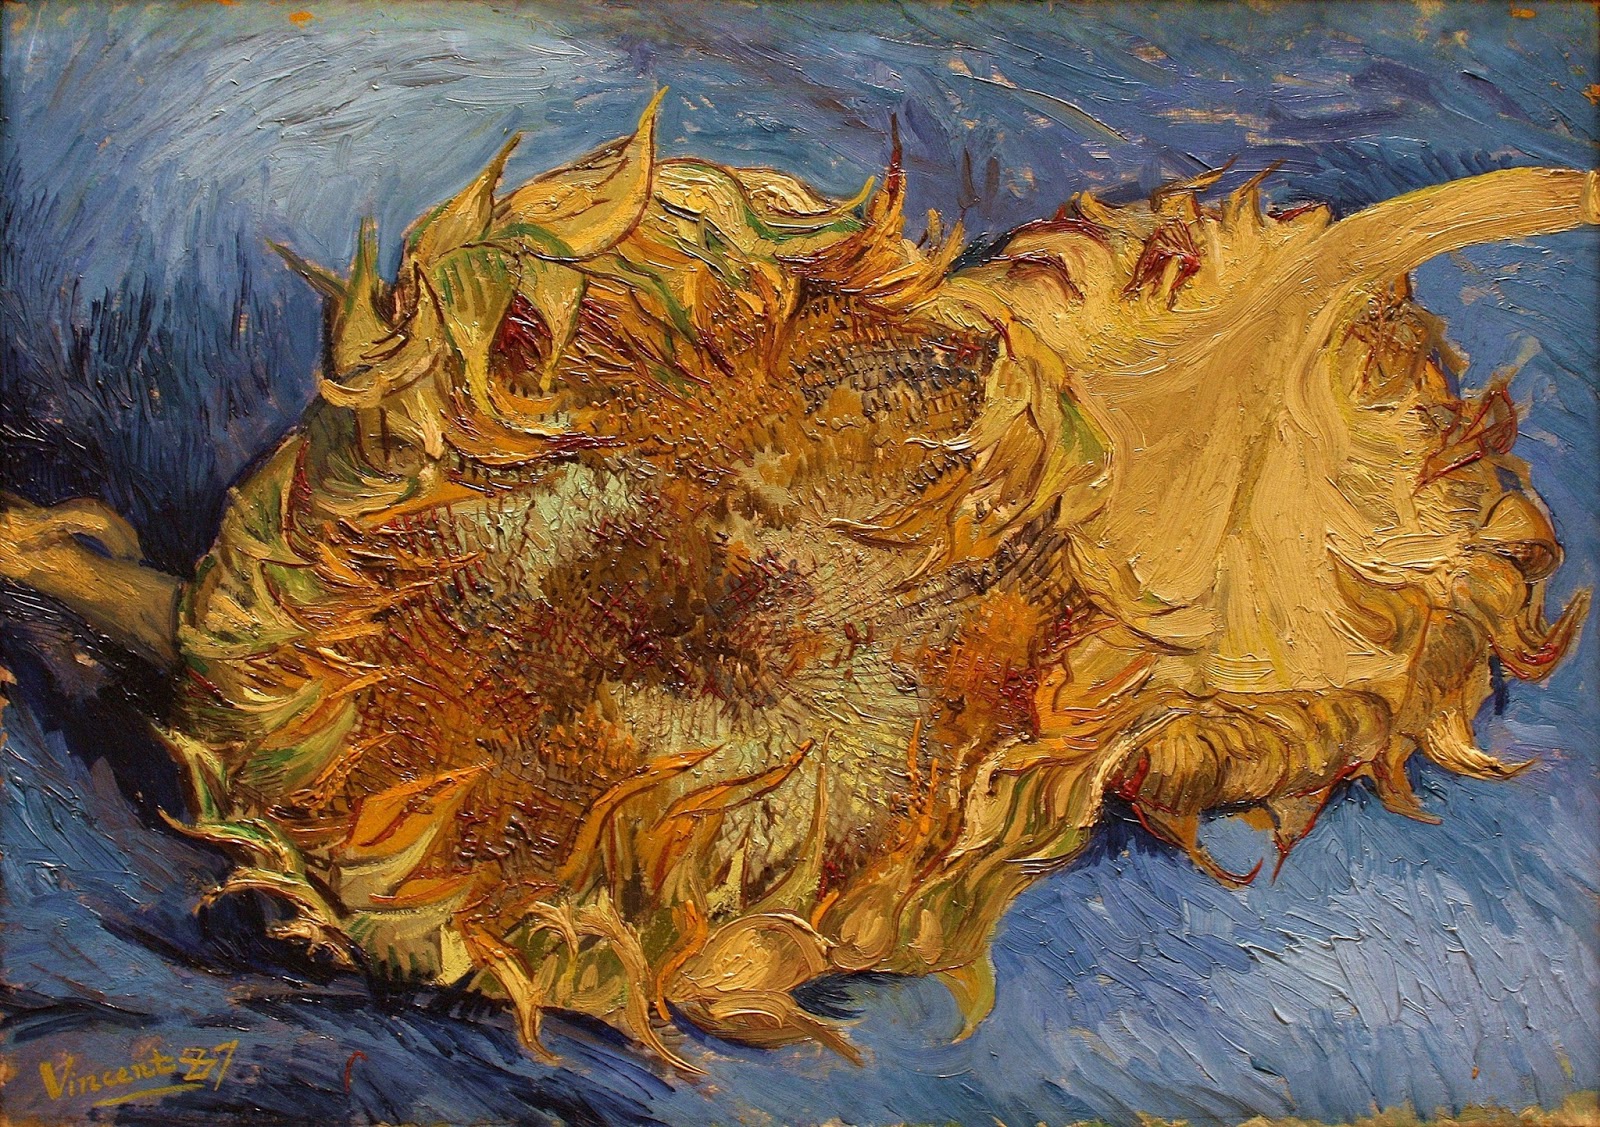 Vincent+Van+Gogh-1853-1890 (474).jpg